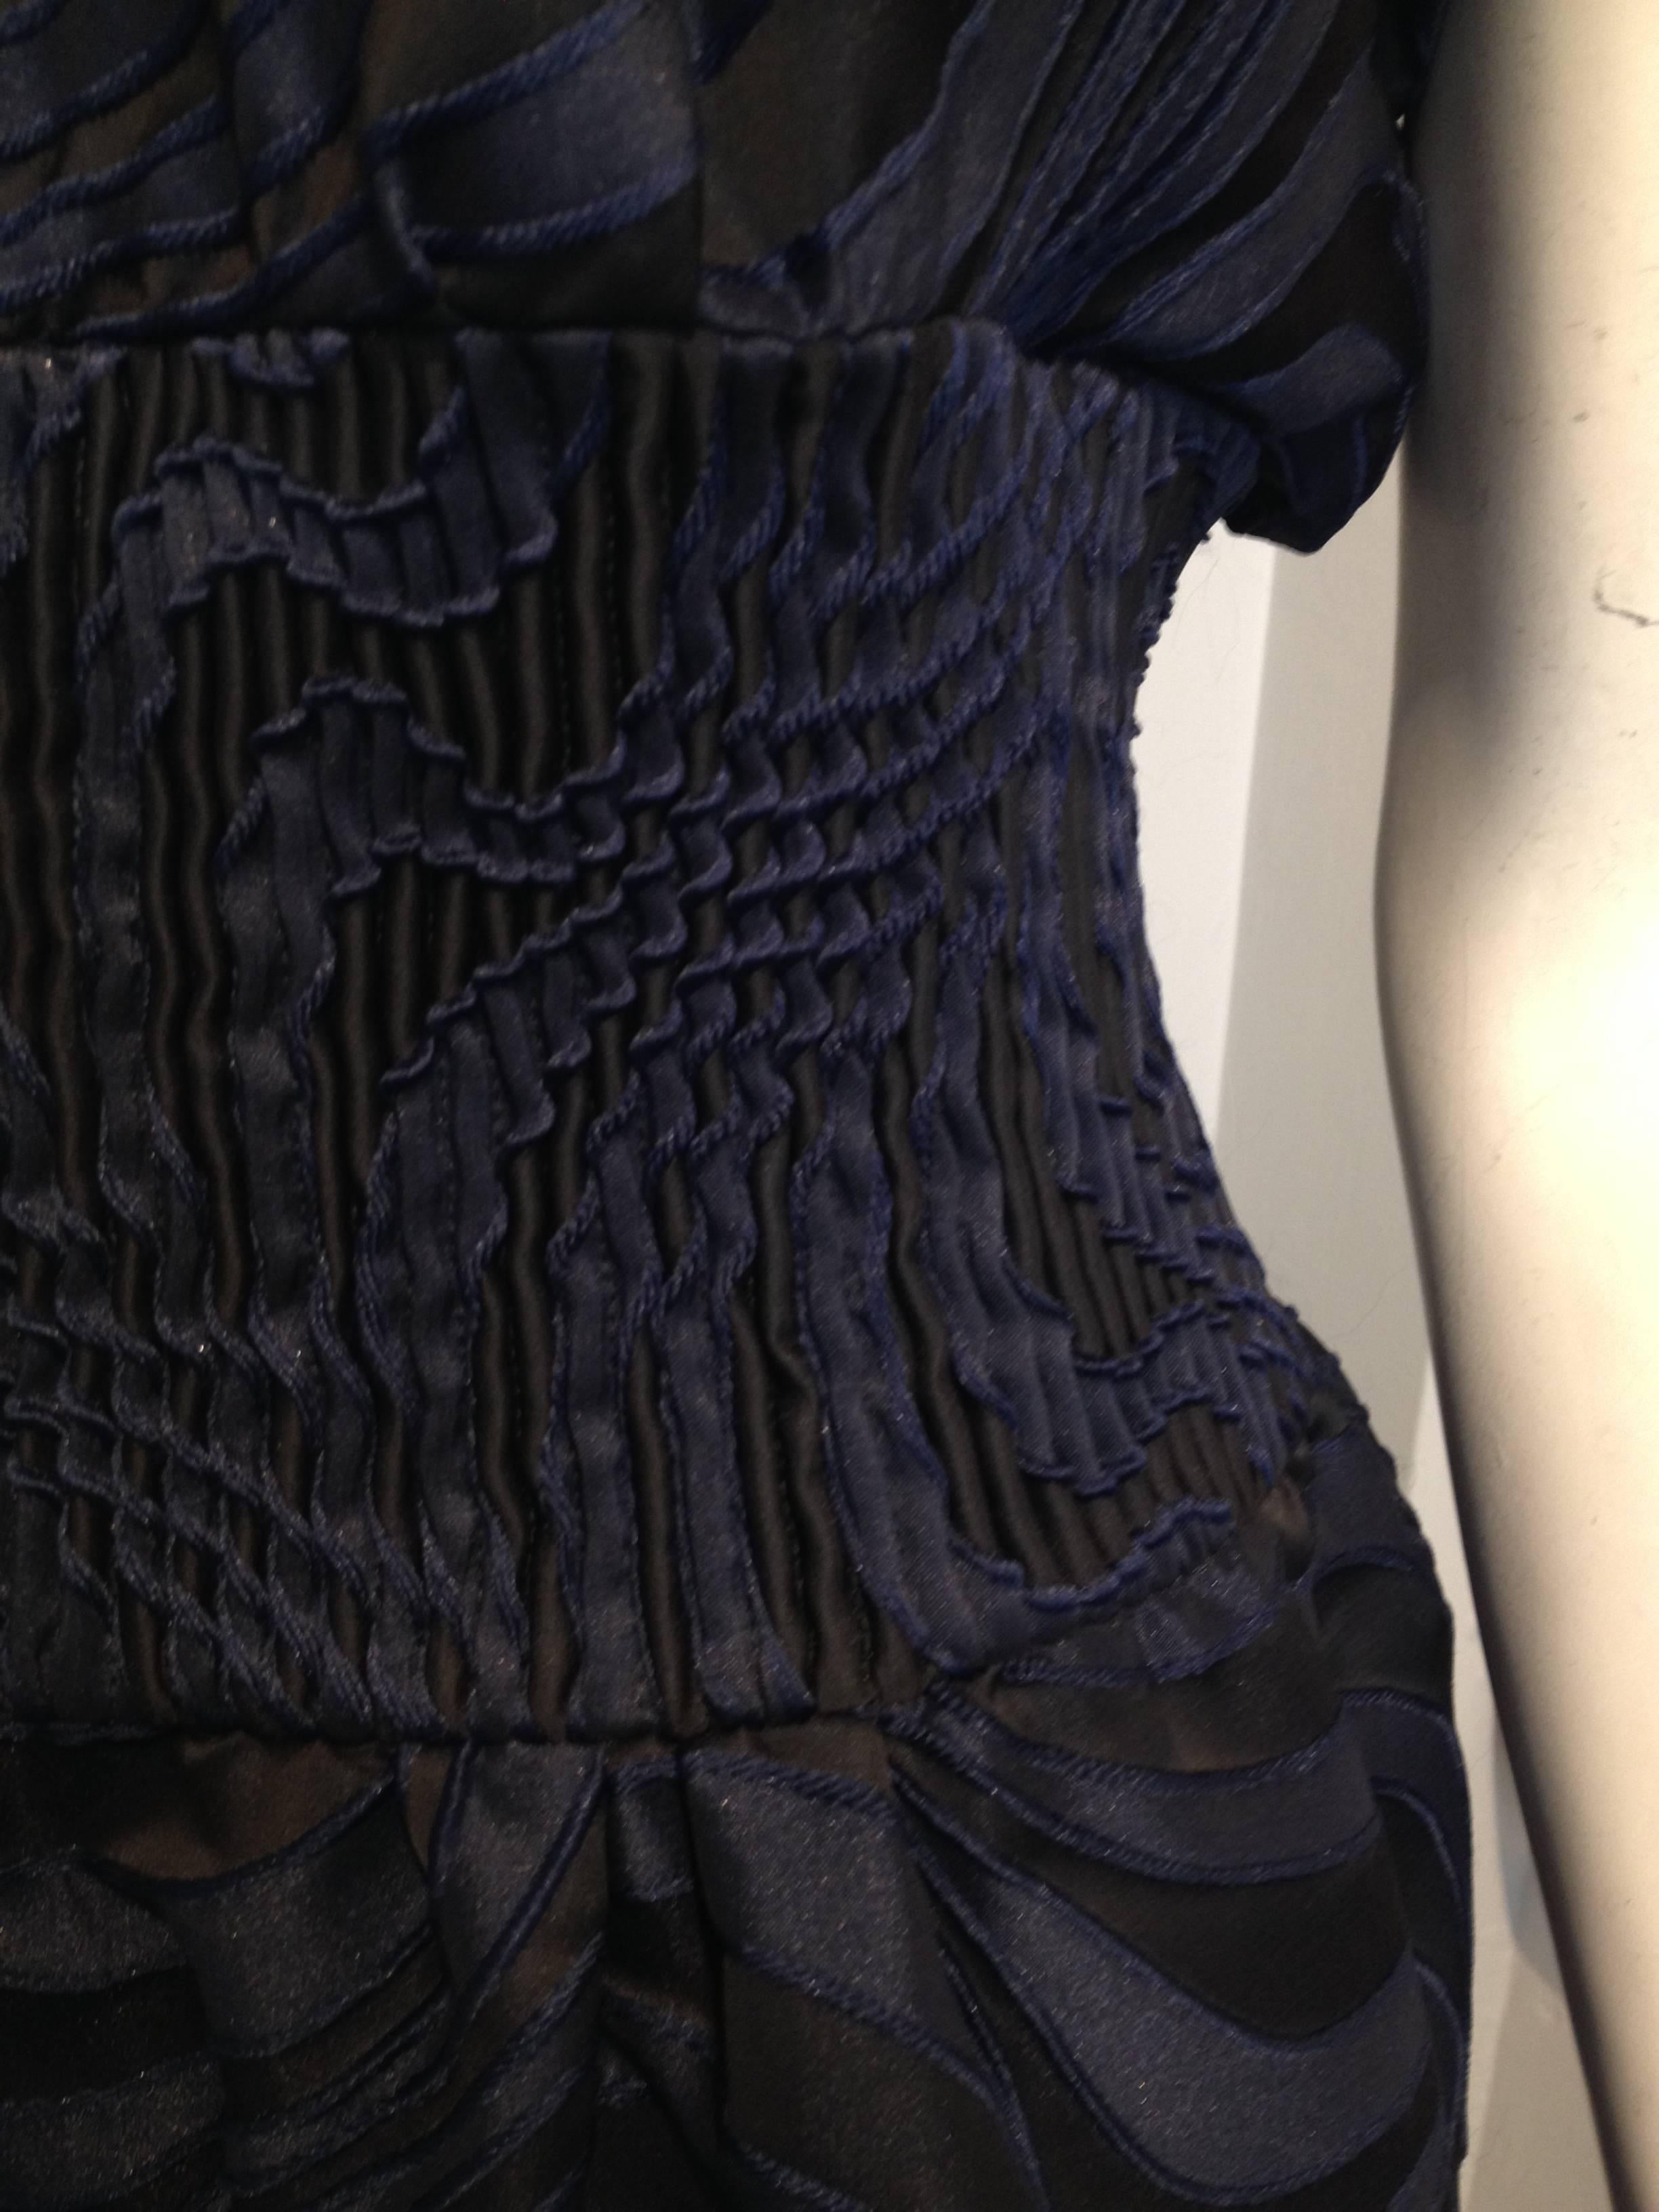 Vionnet Navy and Black Swirled Dress Size 44 (8) 4